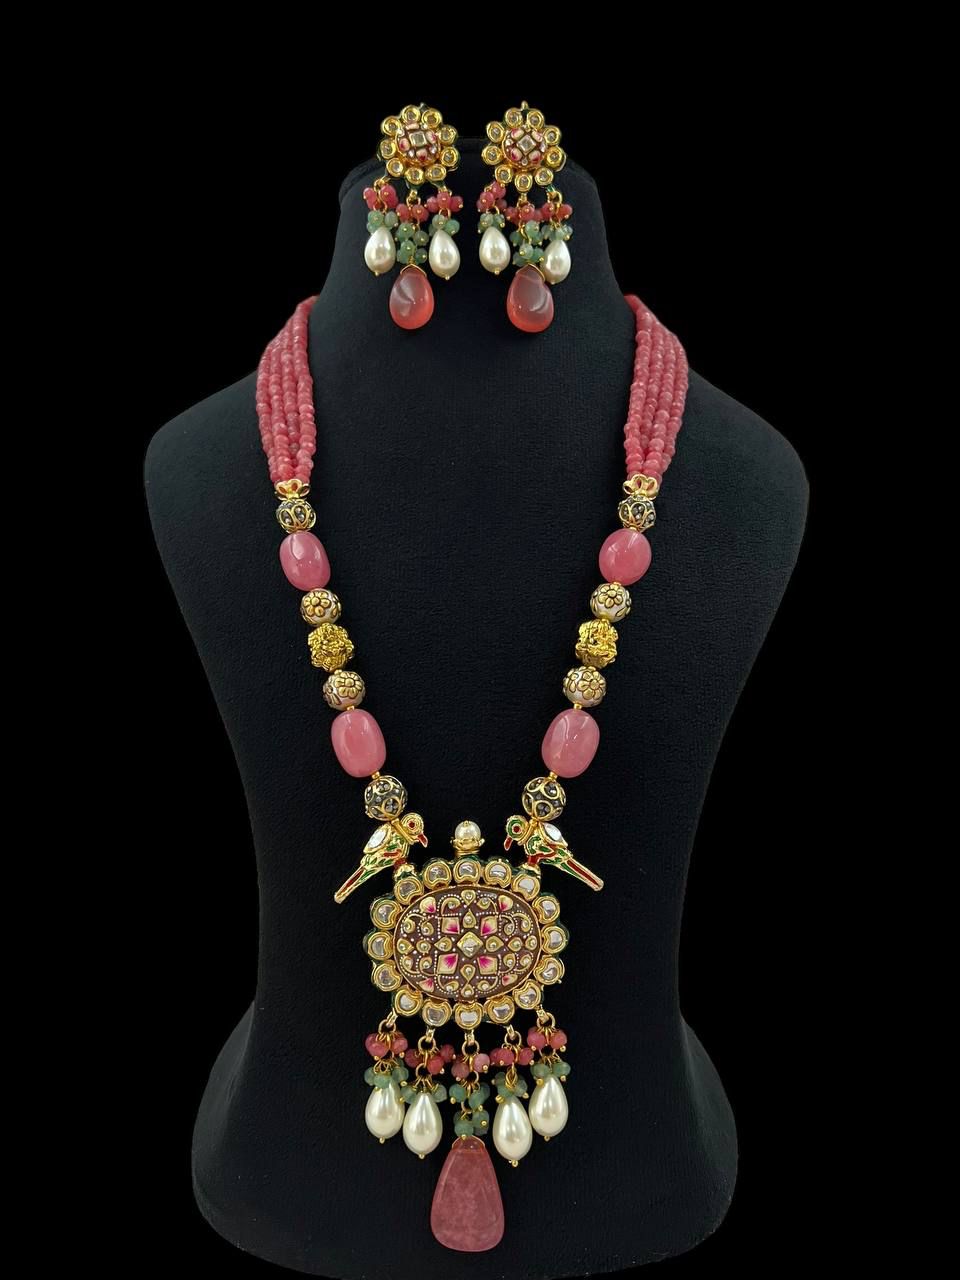 Meenakari kundan pendant necklace | Long necklace